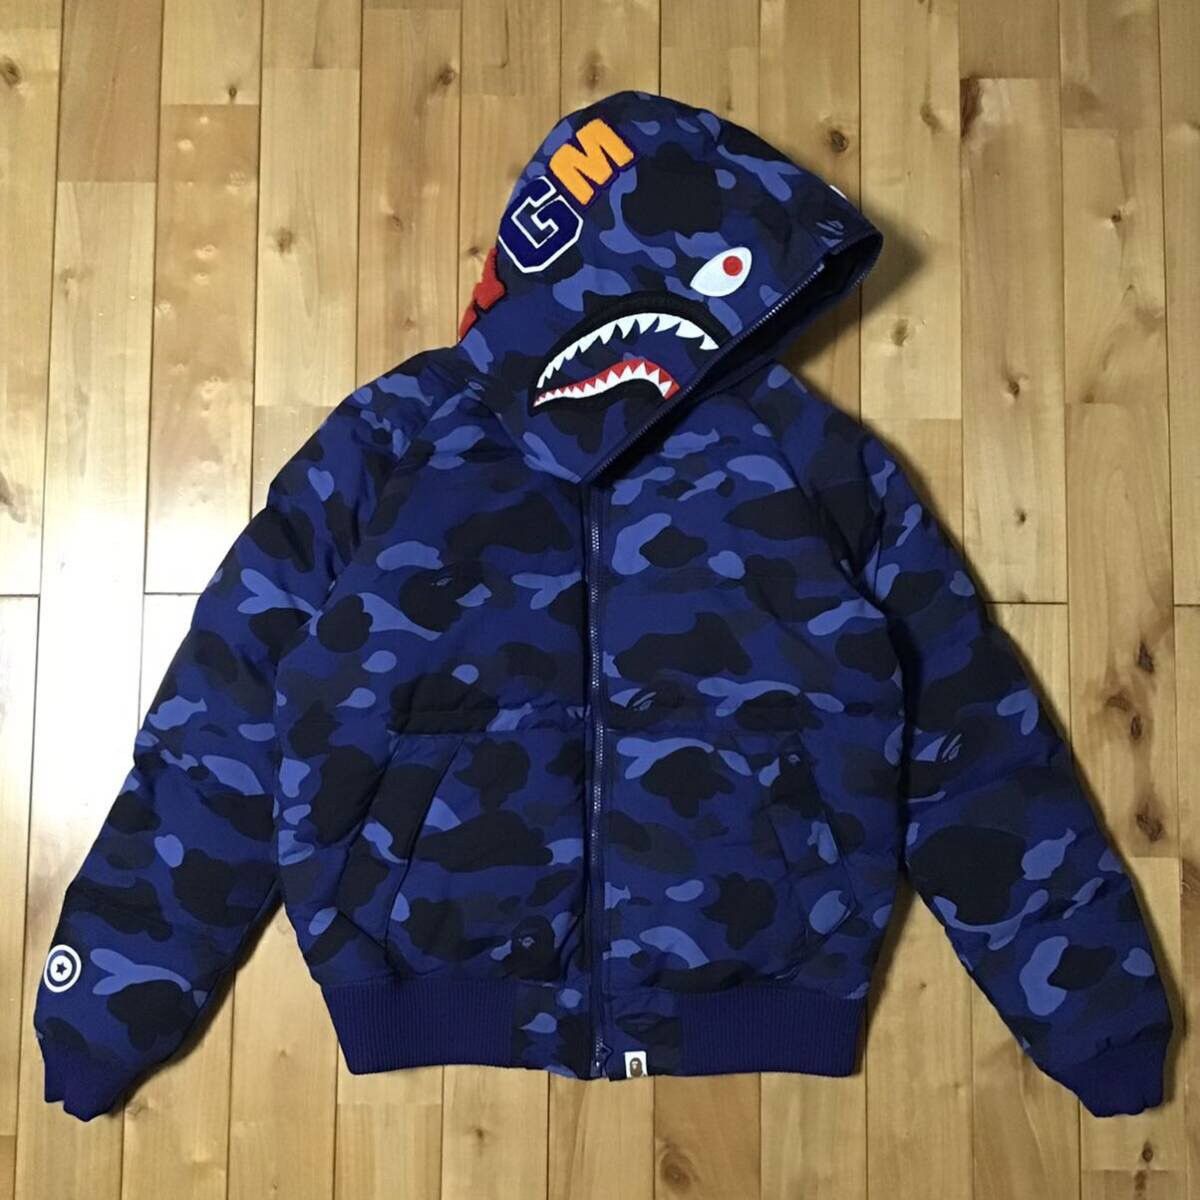 Bape BAPE Shark full zip hoodie Puffer Down Jacket Blue camo APE | Grailed